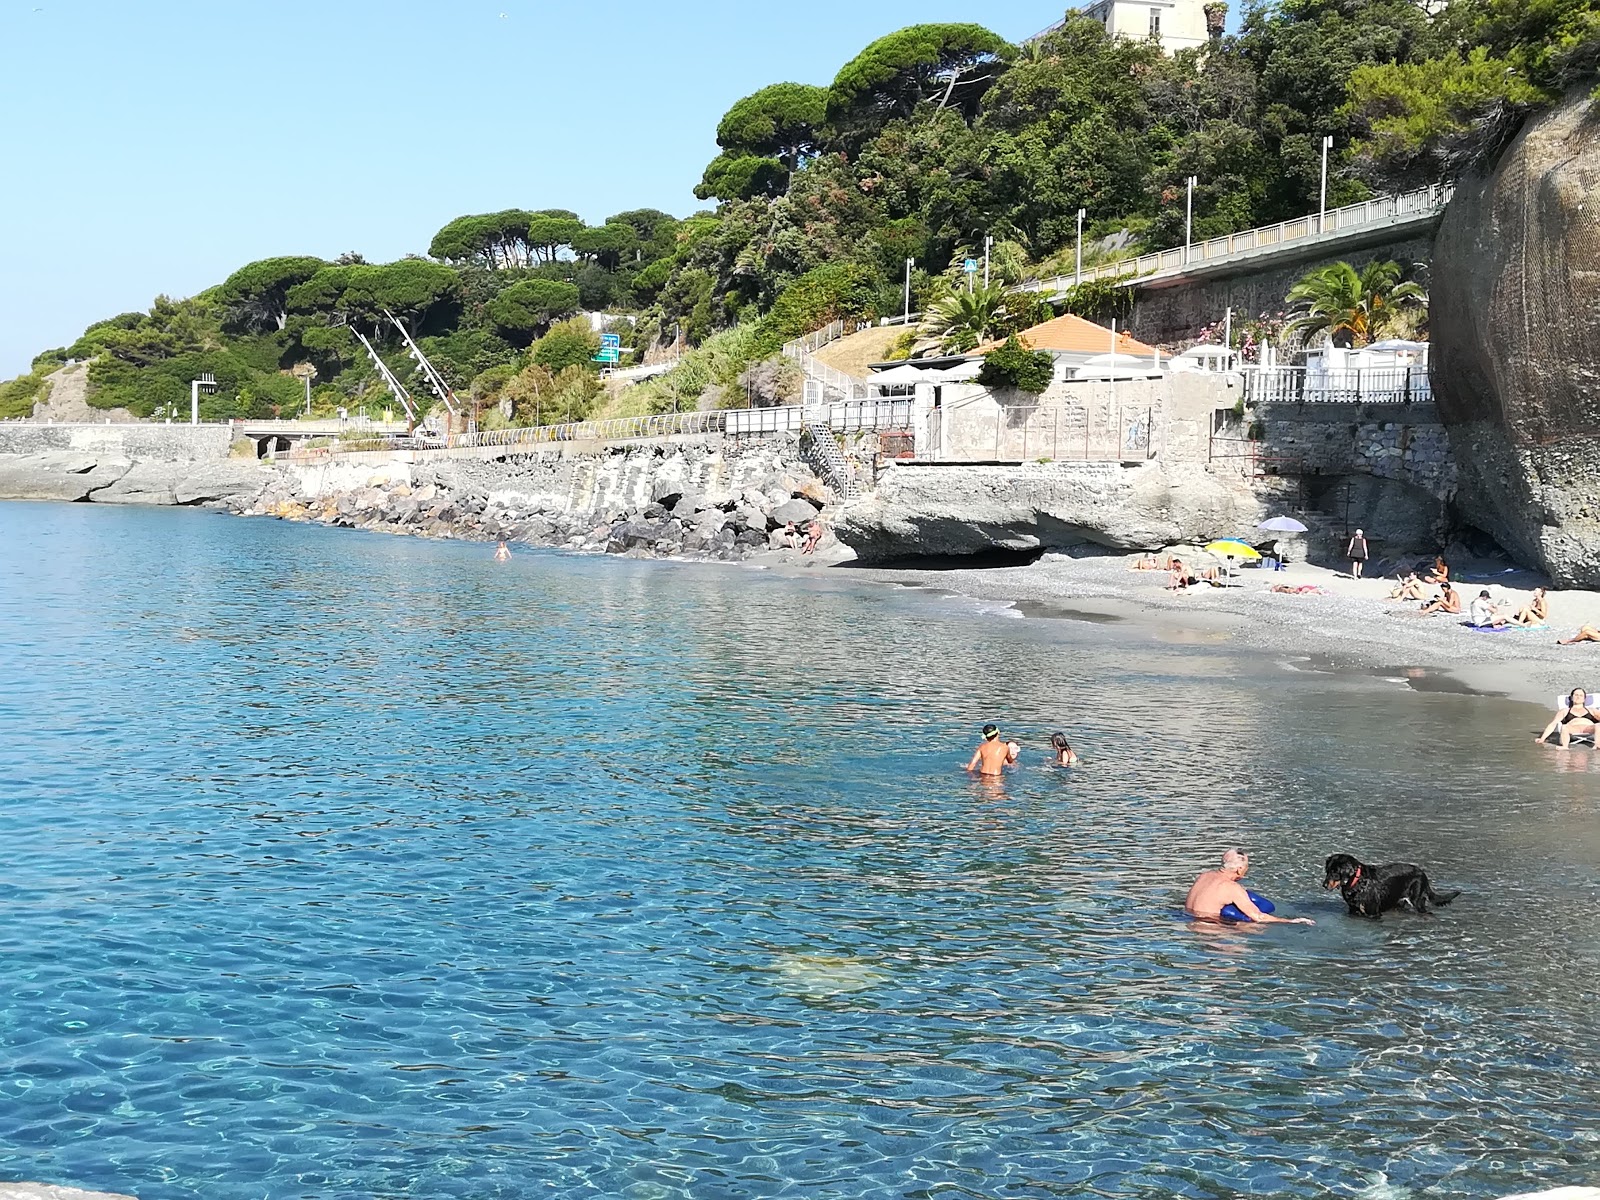 Spiaggia Libera Comunale的照片 海滩度假区